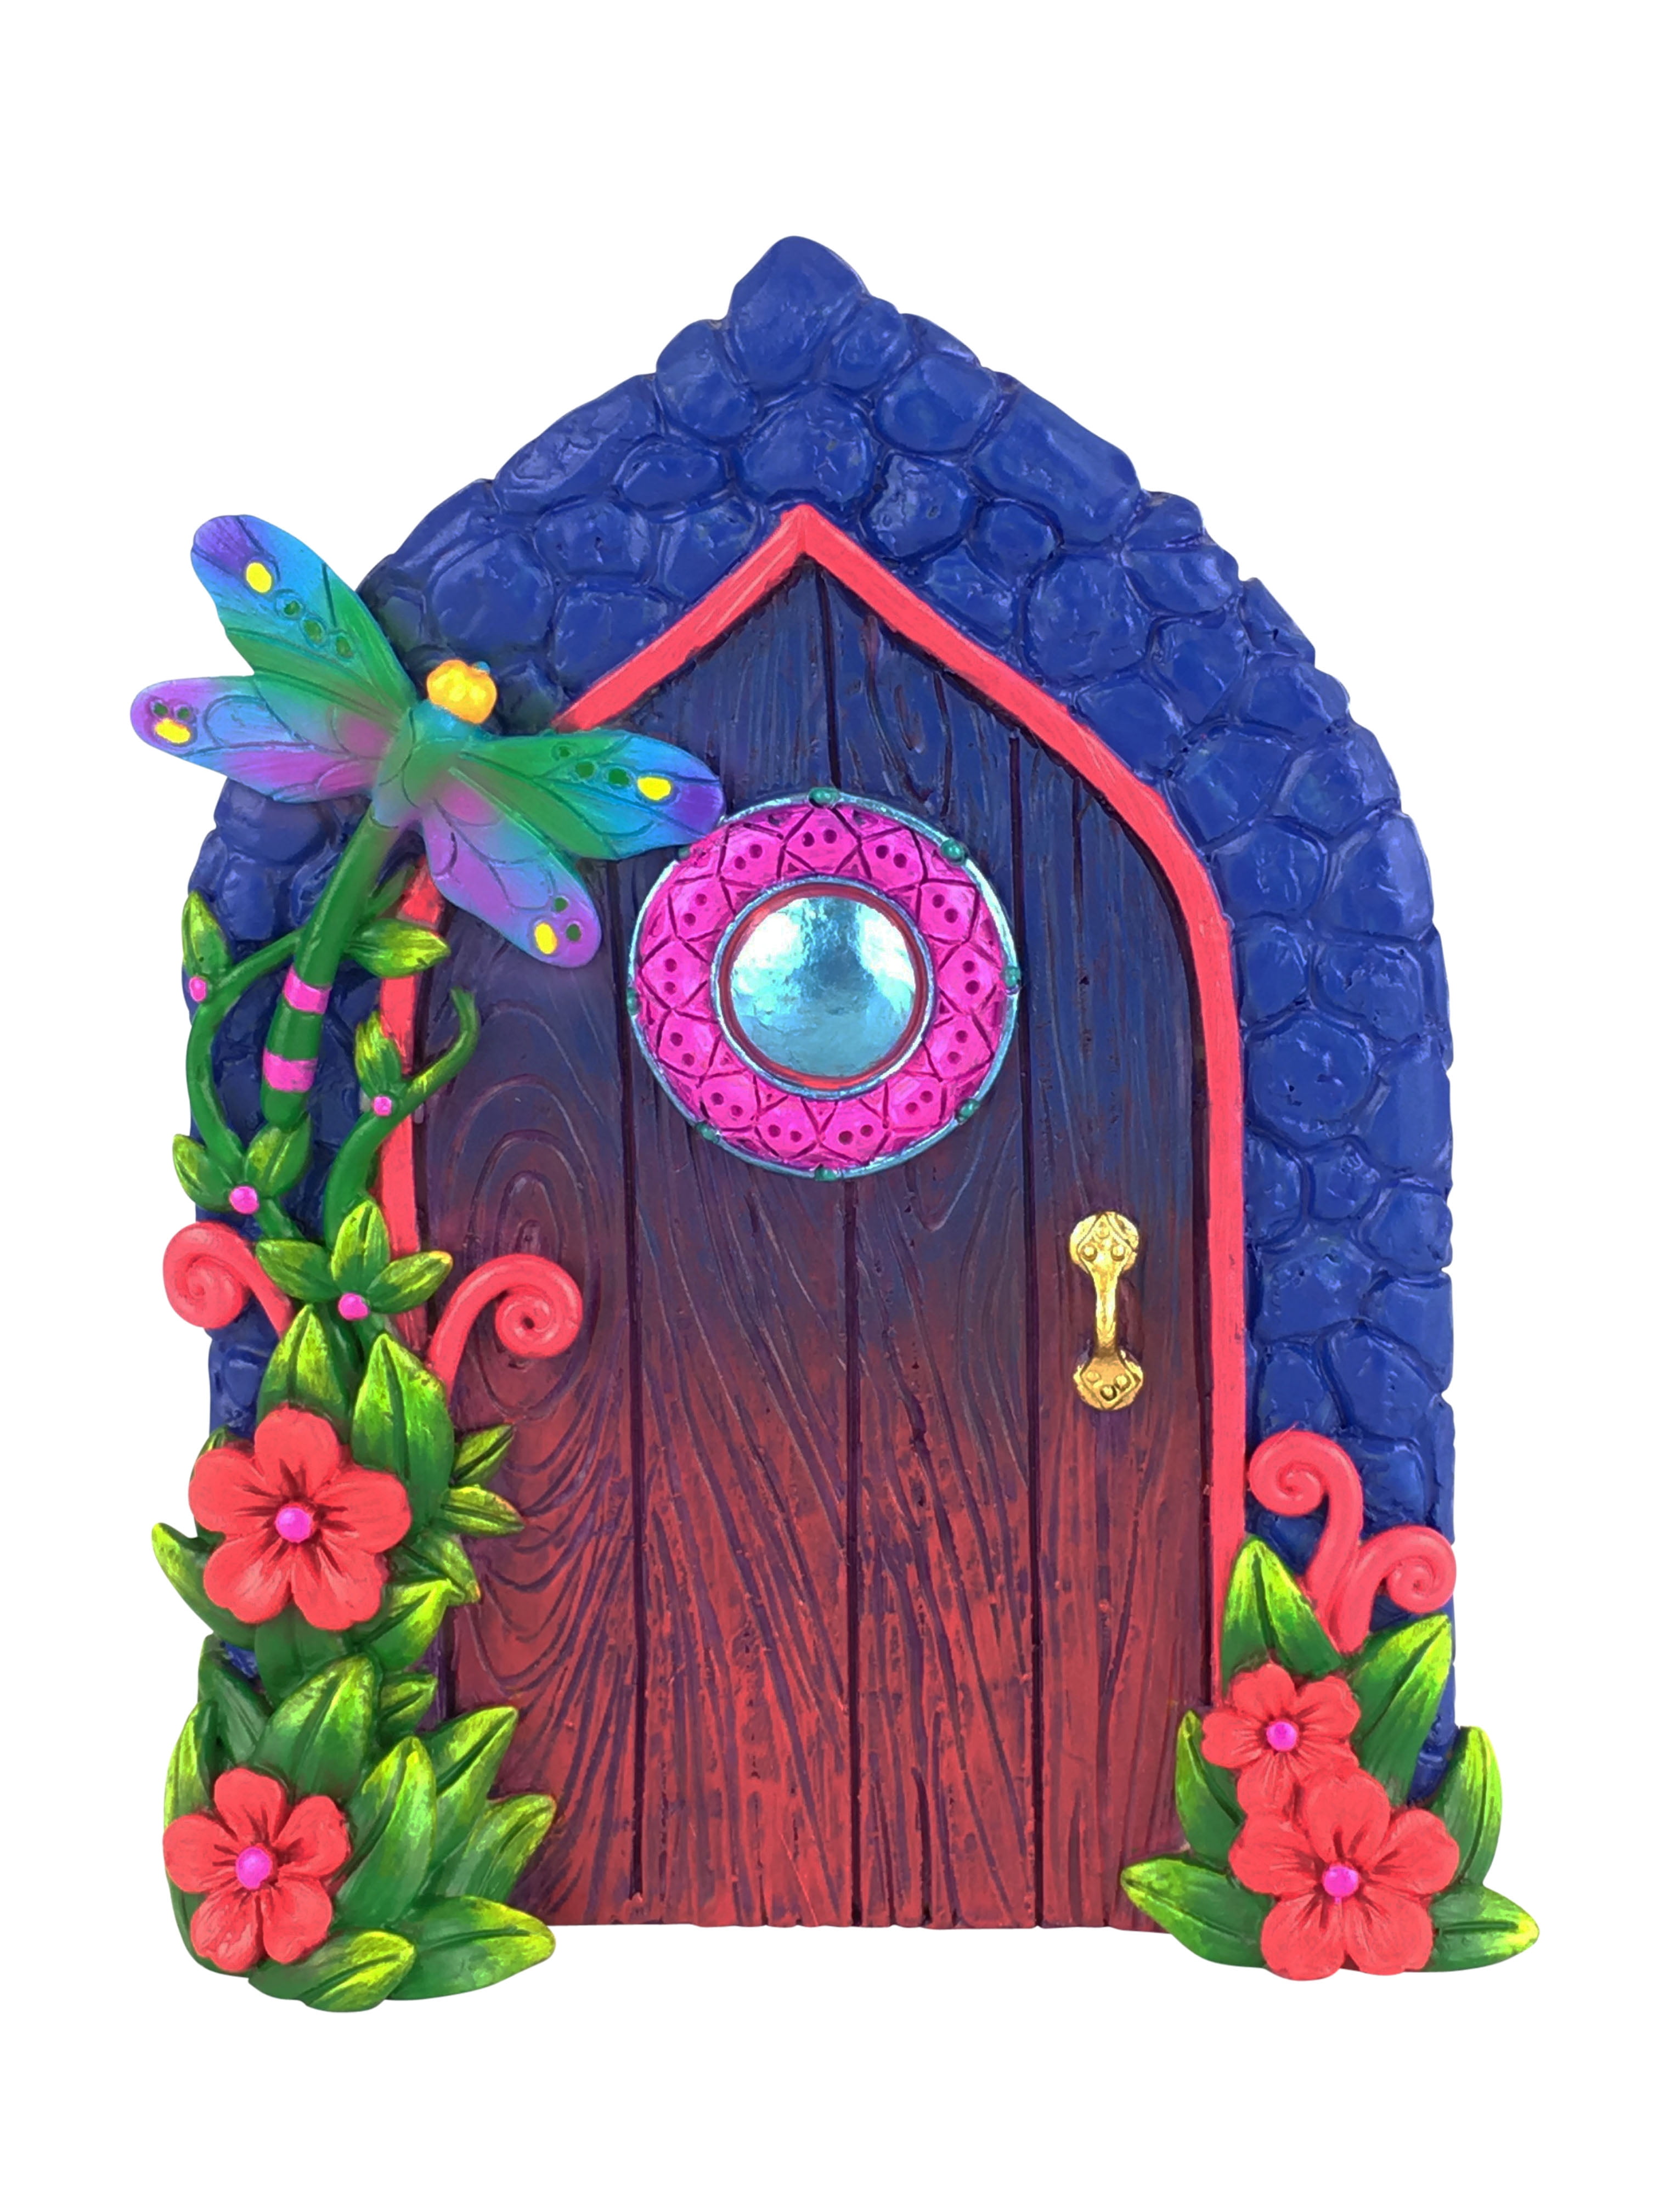 Enchanted Mini Fairy Garden Accessories Decorative Metal Garden Arbor Gate 